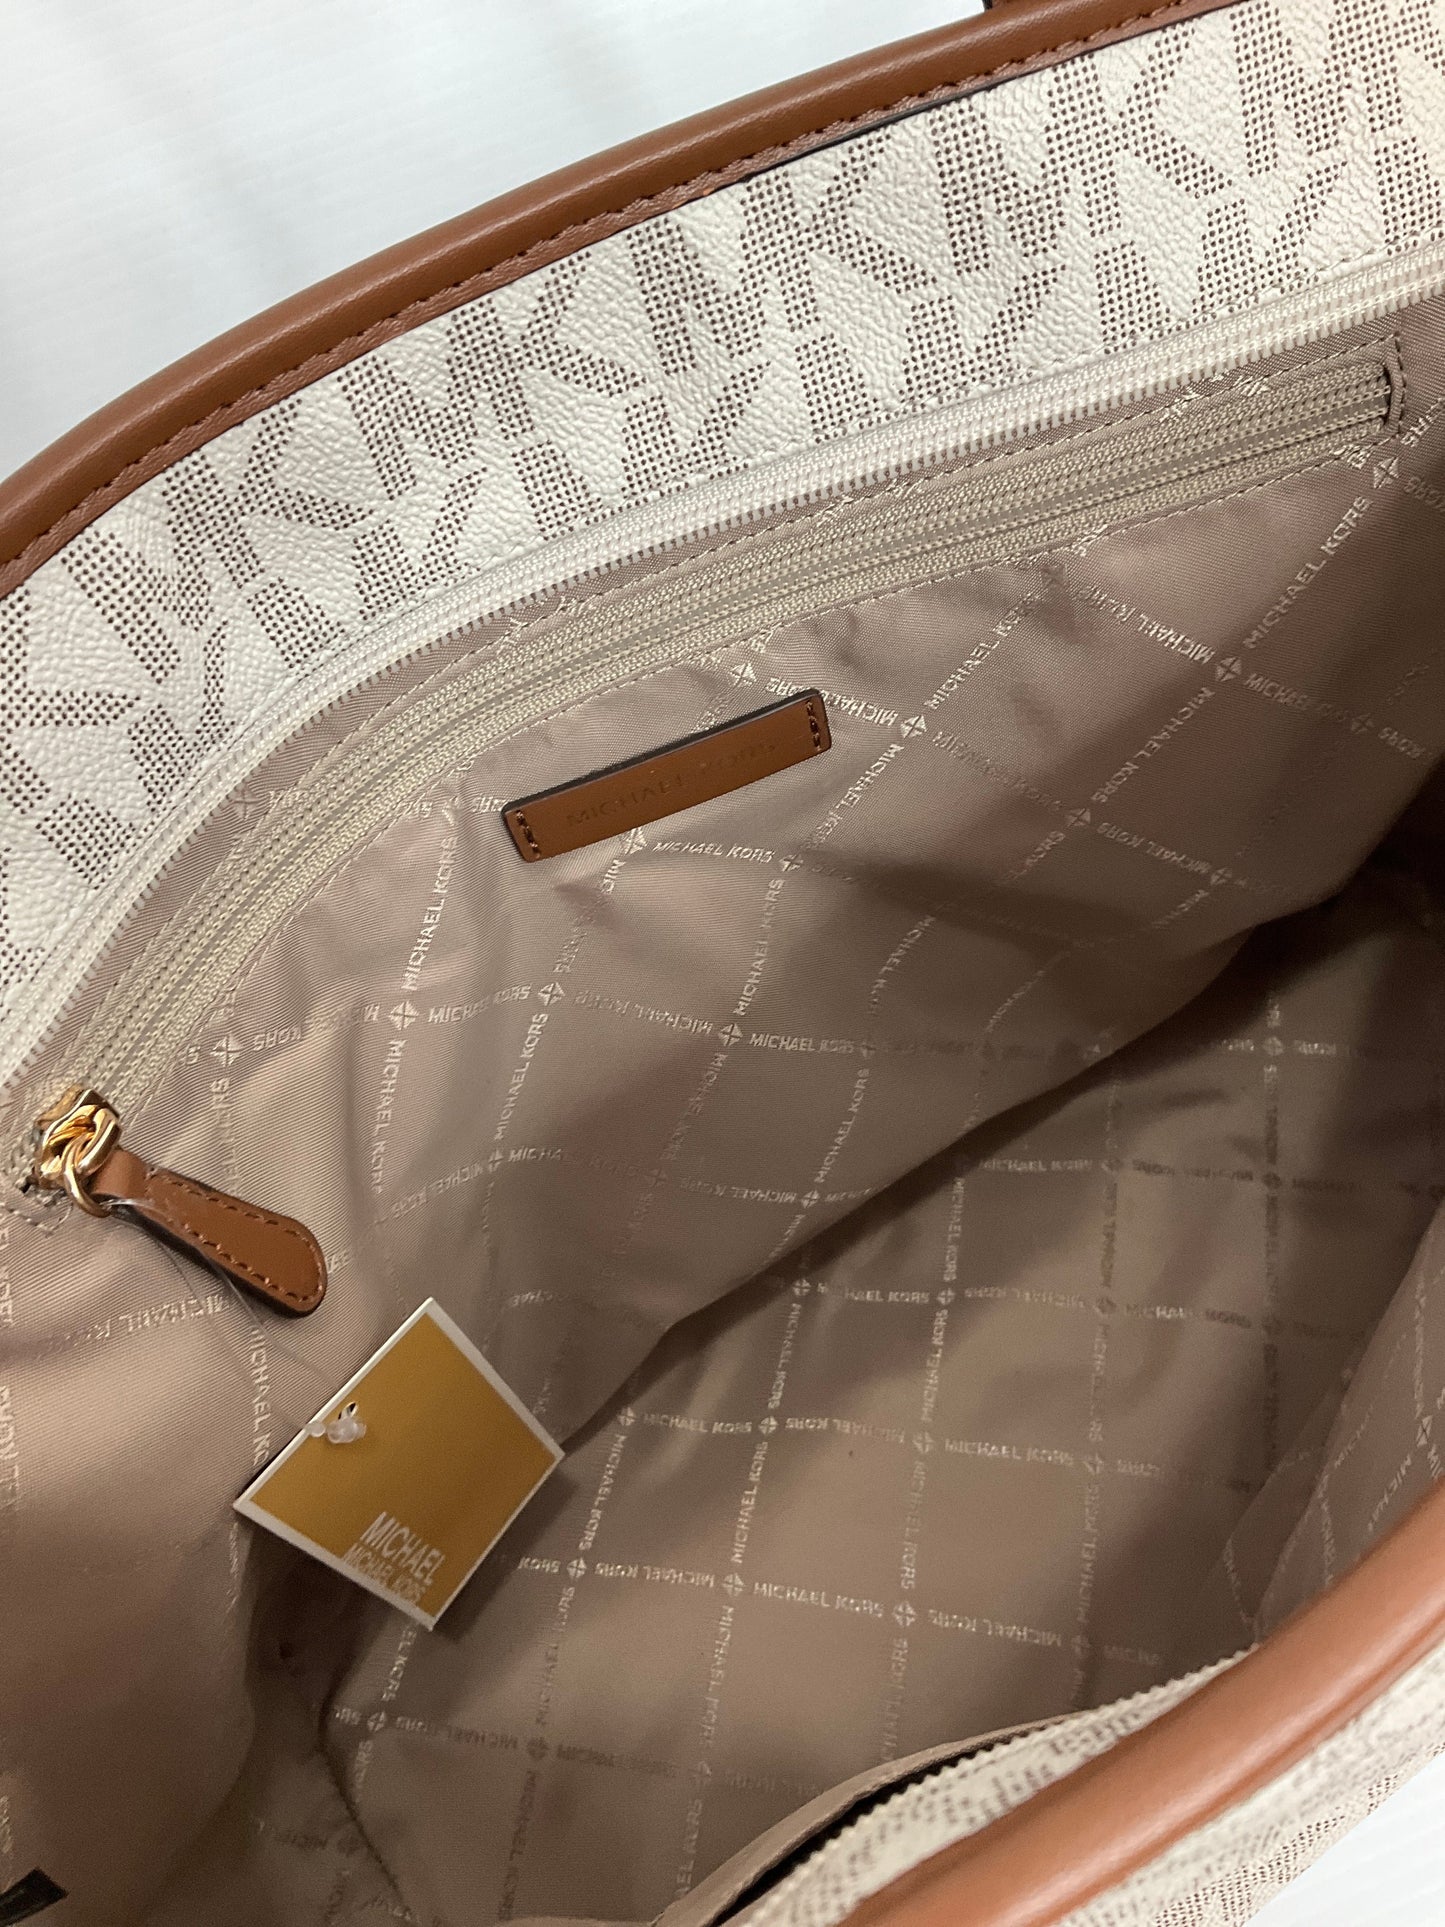 Handbag Designer Michael Kors, Size Large